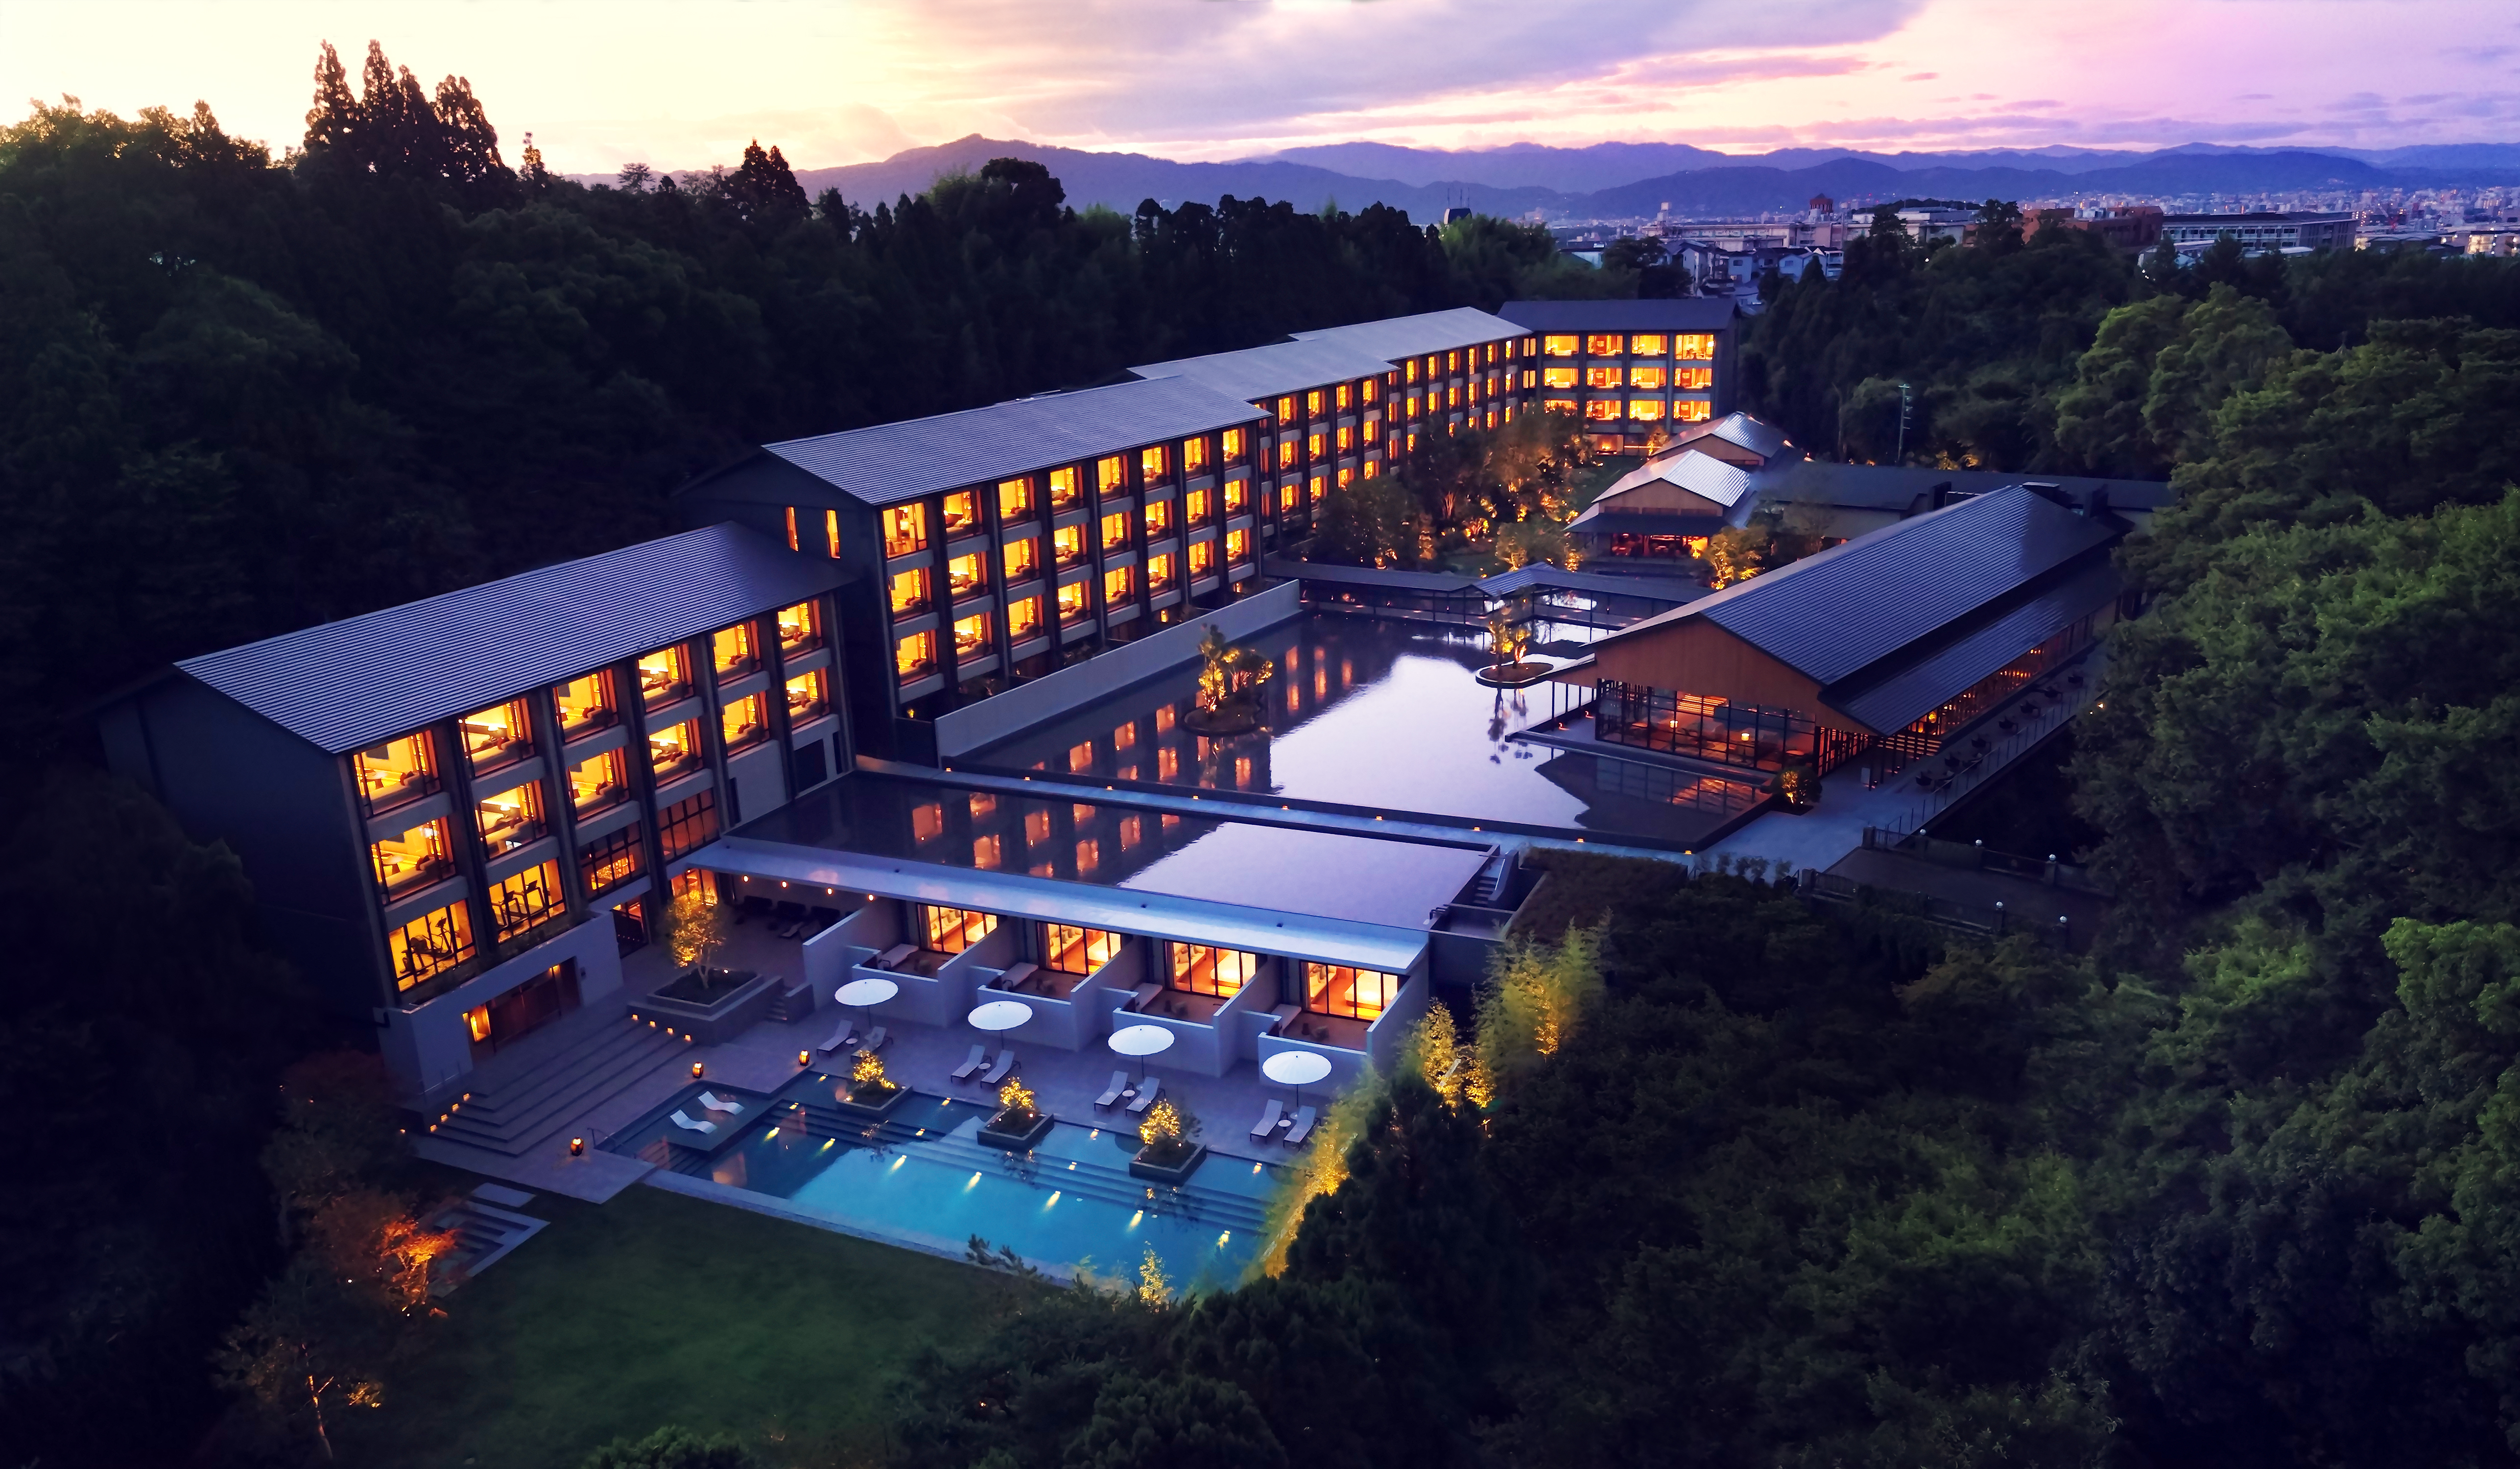 ROKU KYOTO LXR Hotels Resort - Aerial View